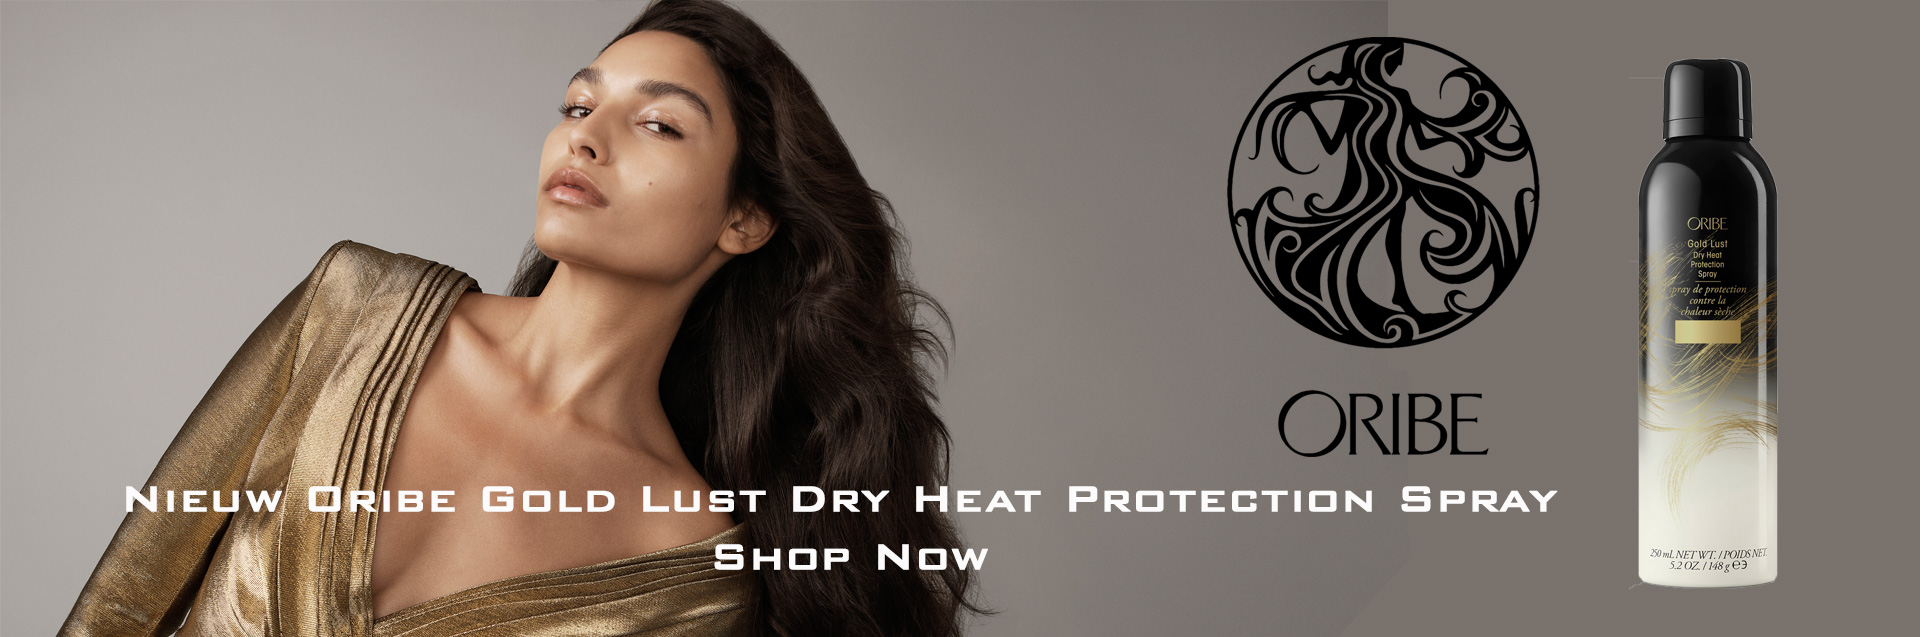 Oribe Gold Lust Dry Heat Protection Spray